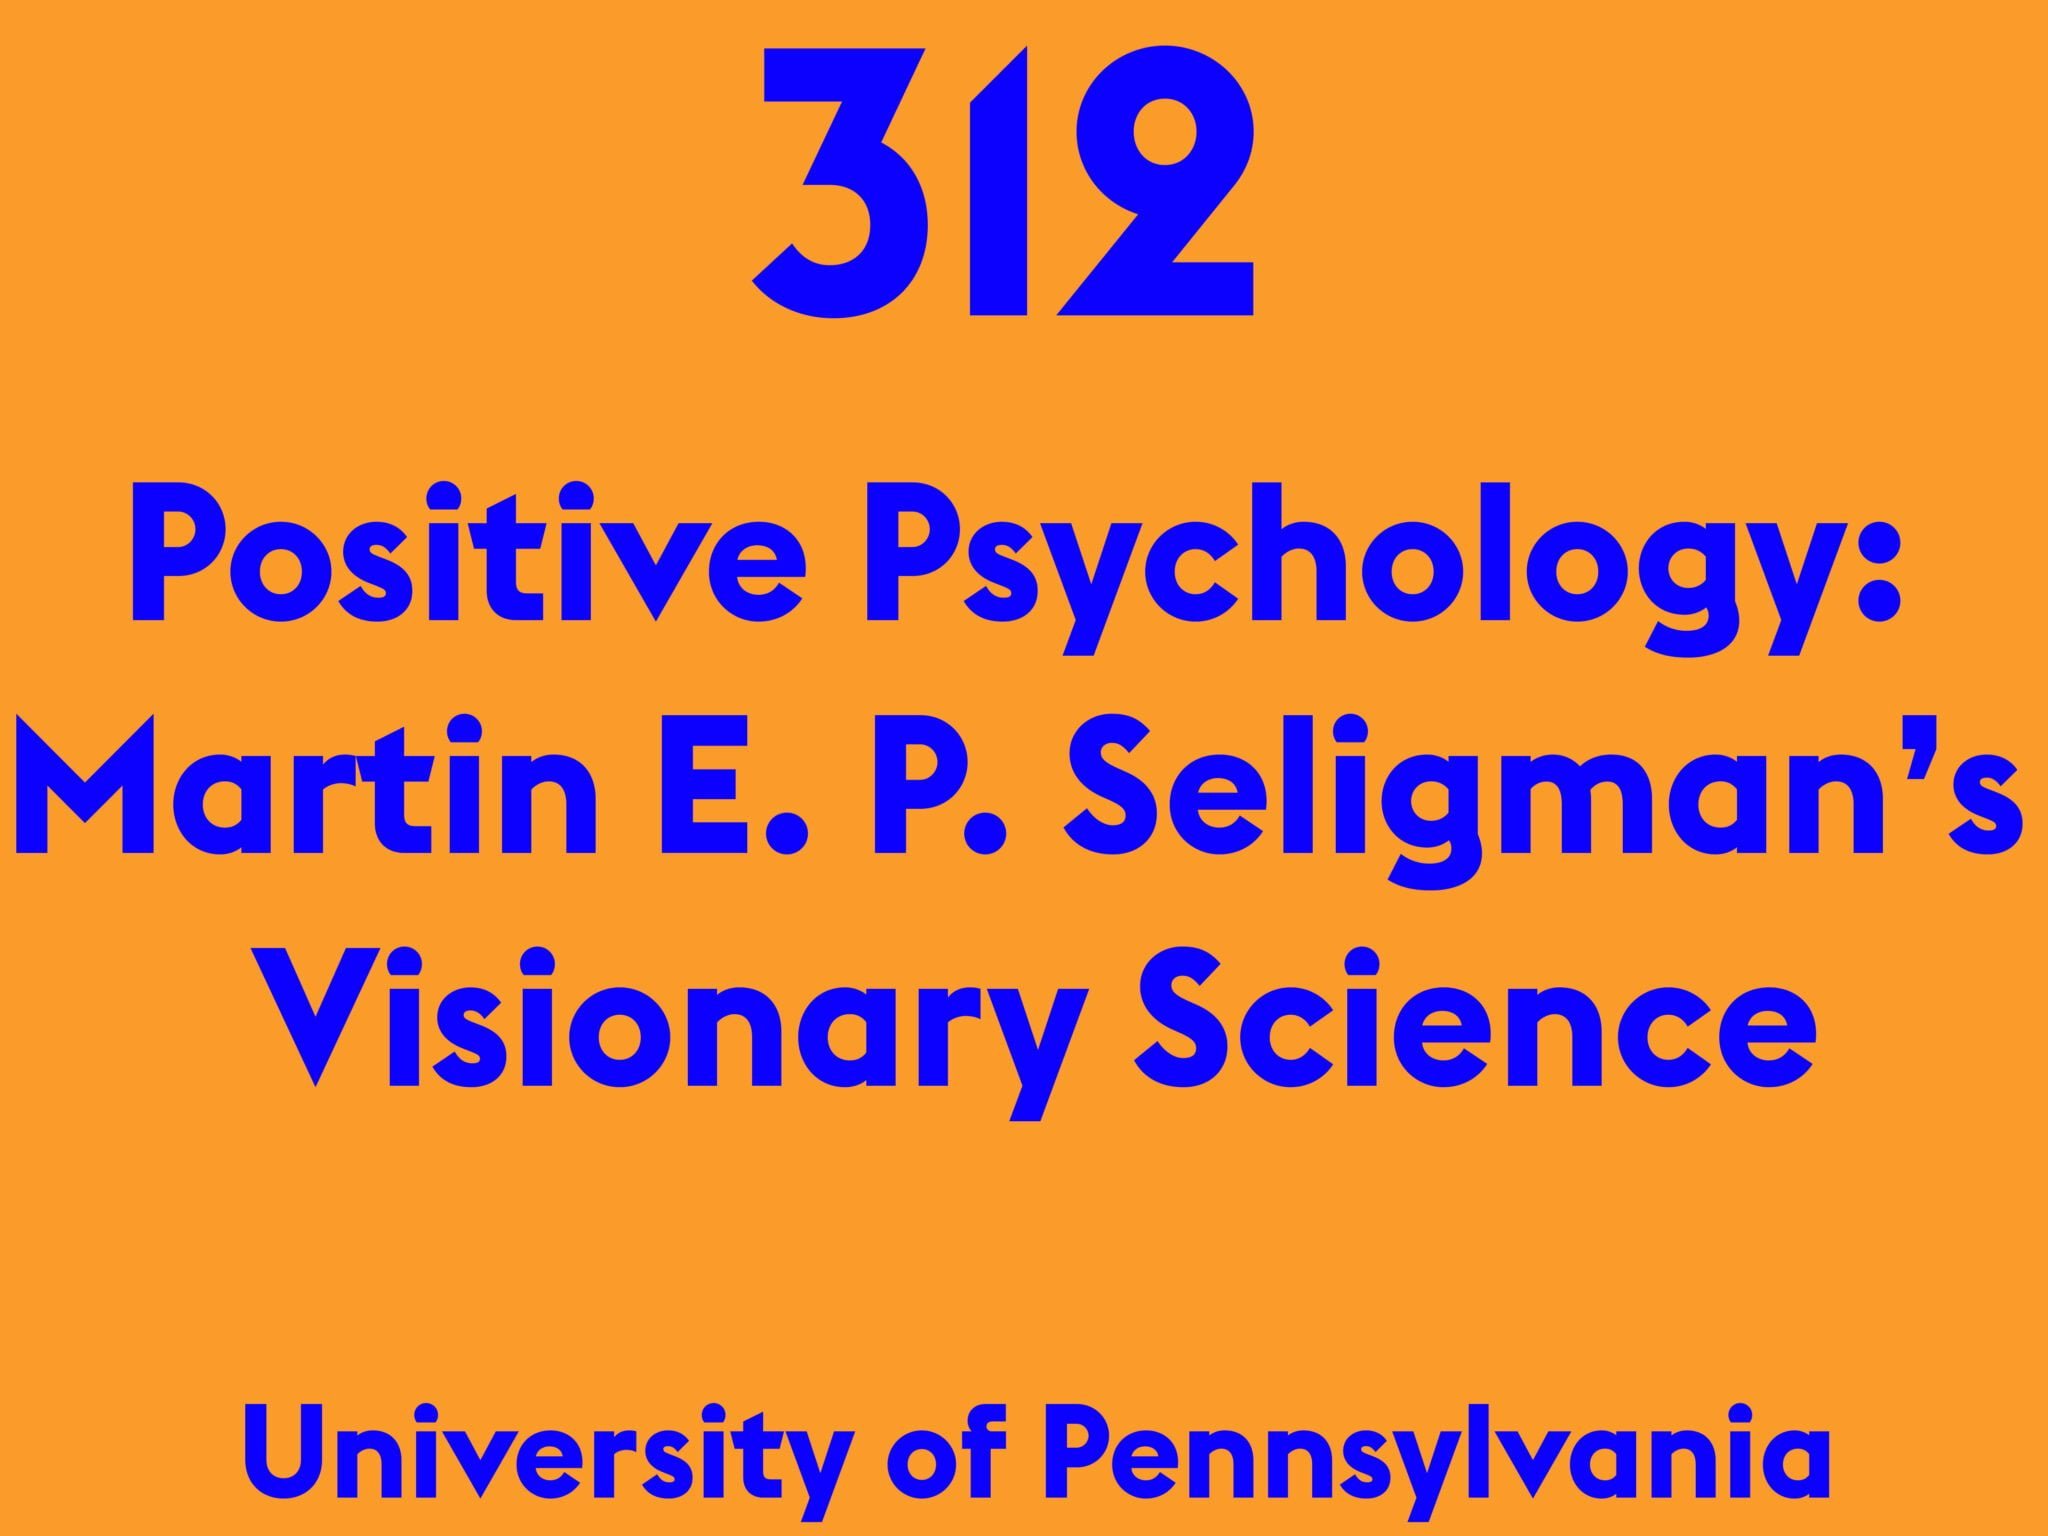 Positive Psychology: Martin E. P. Seligman’s Visionary Science